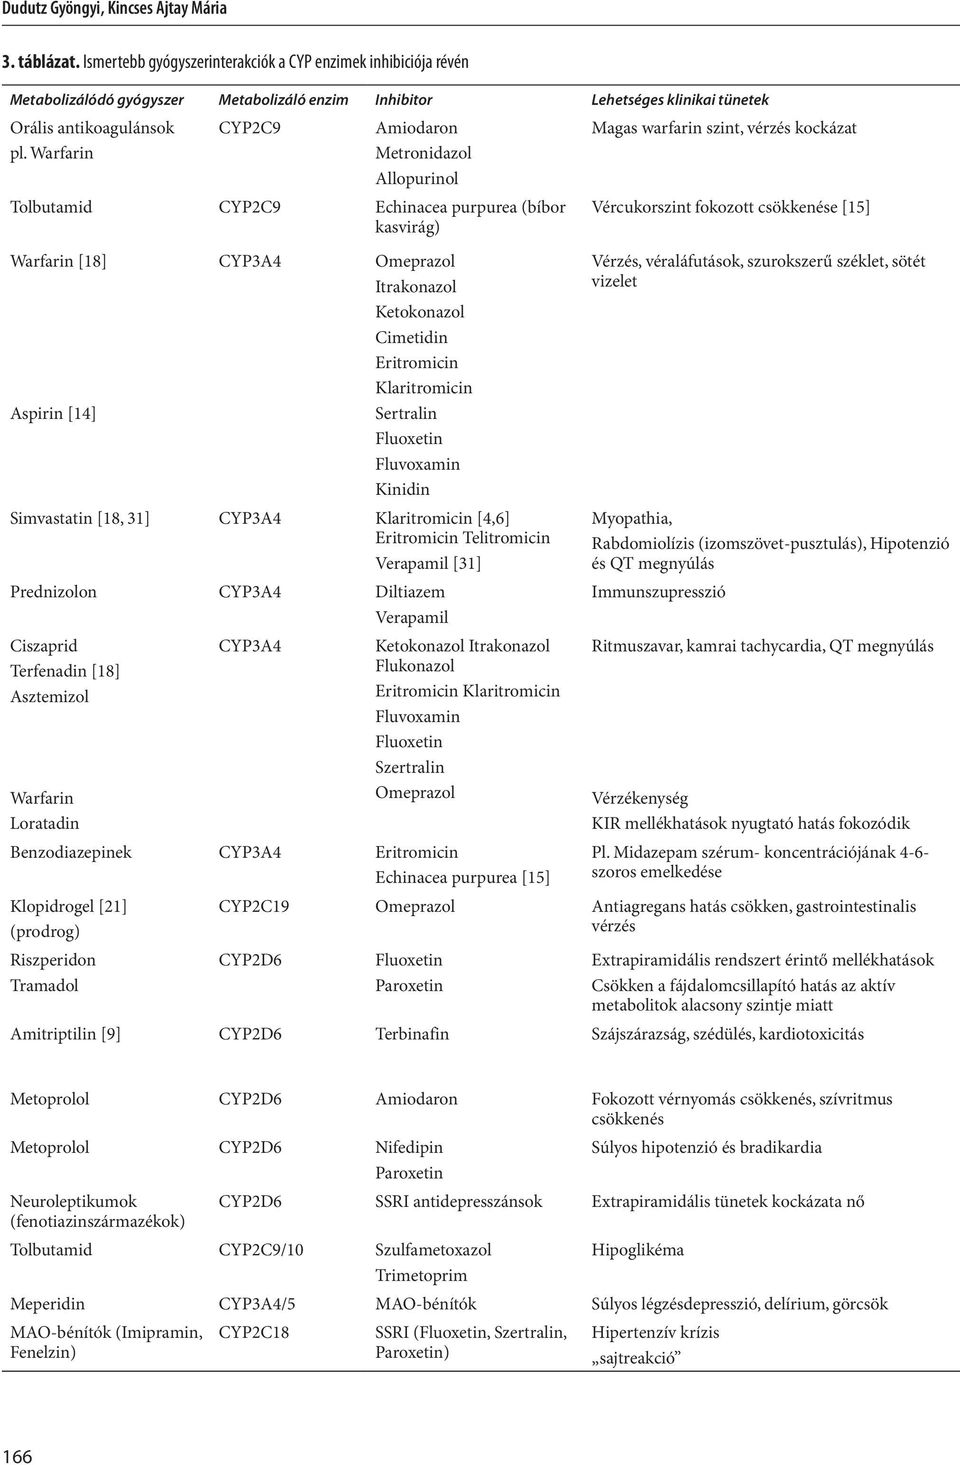 Warfarin CYP2C9 Amiodaron Metronidazol Allopurinol Tolbutamid CYP2C9 Echinacea purpurea (bíbor kasvirág) Warfarin [18] Aspirin [14] CYP3A4 Omeprazol Itrakonazol Ketokonazol Cimetidin Eritromicin